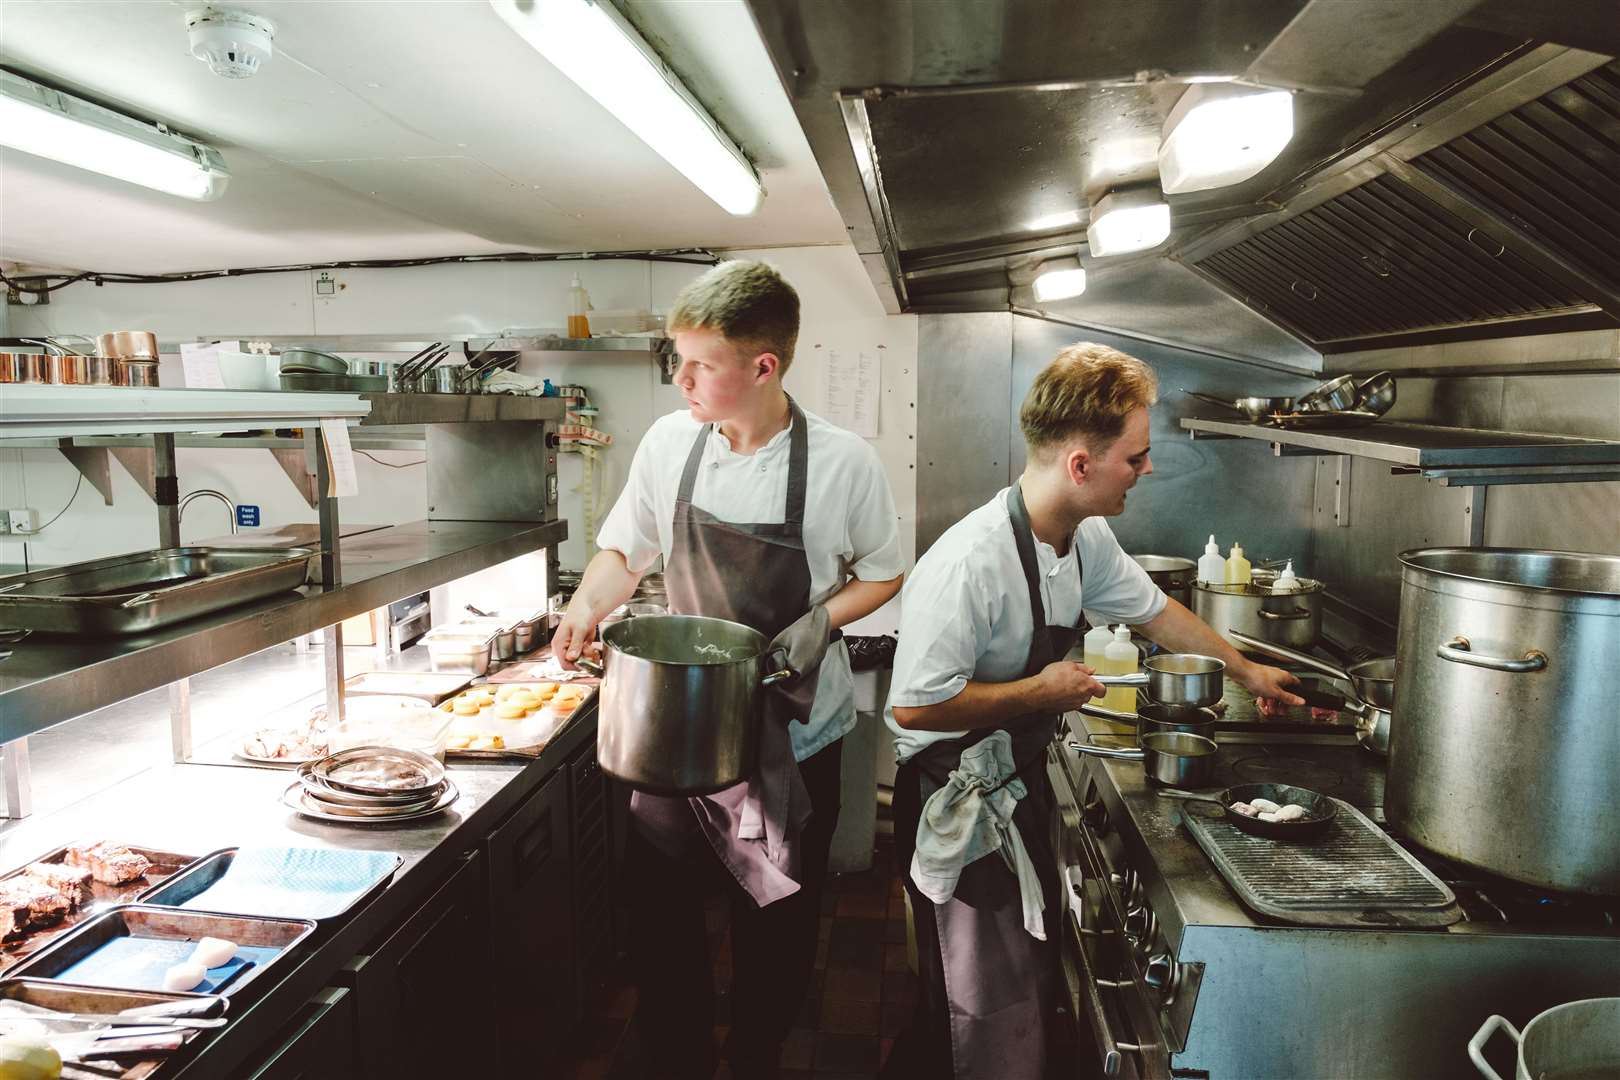 Work in the kitchens at Thackeray's restaurant in Tunbridge Wells